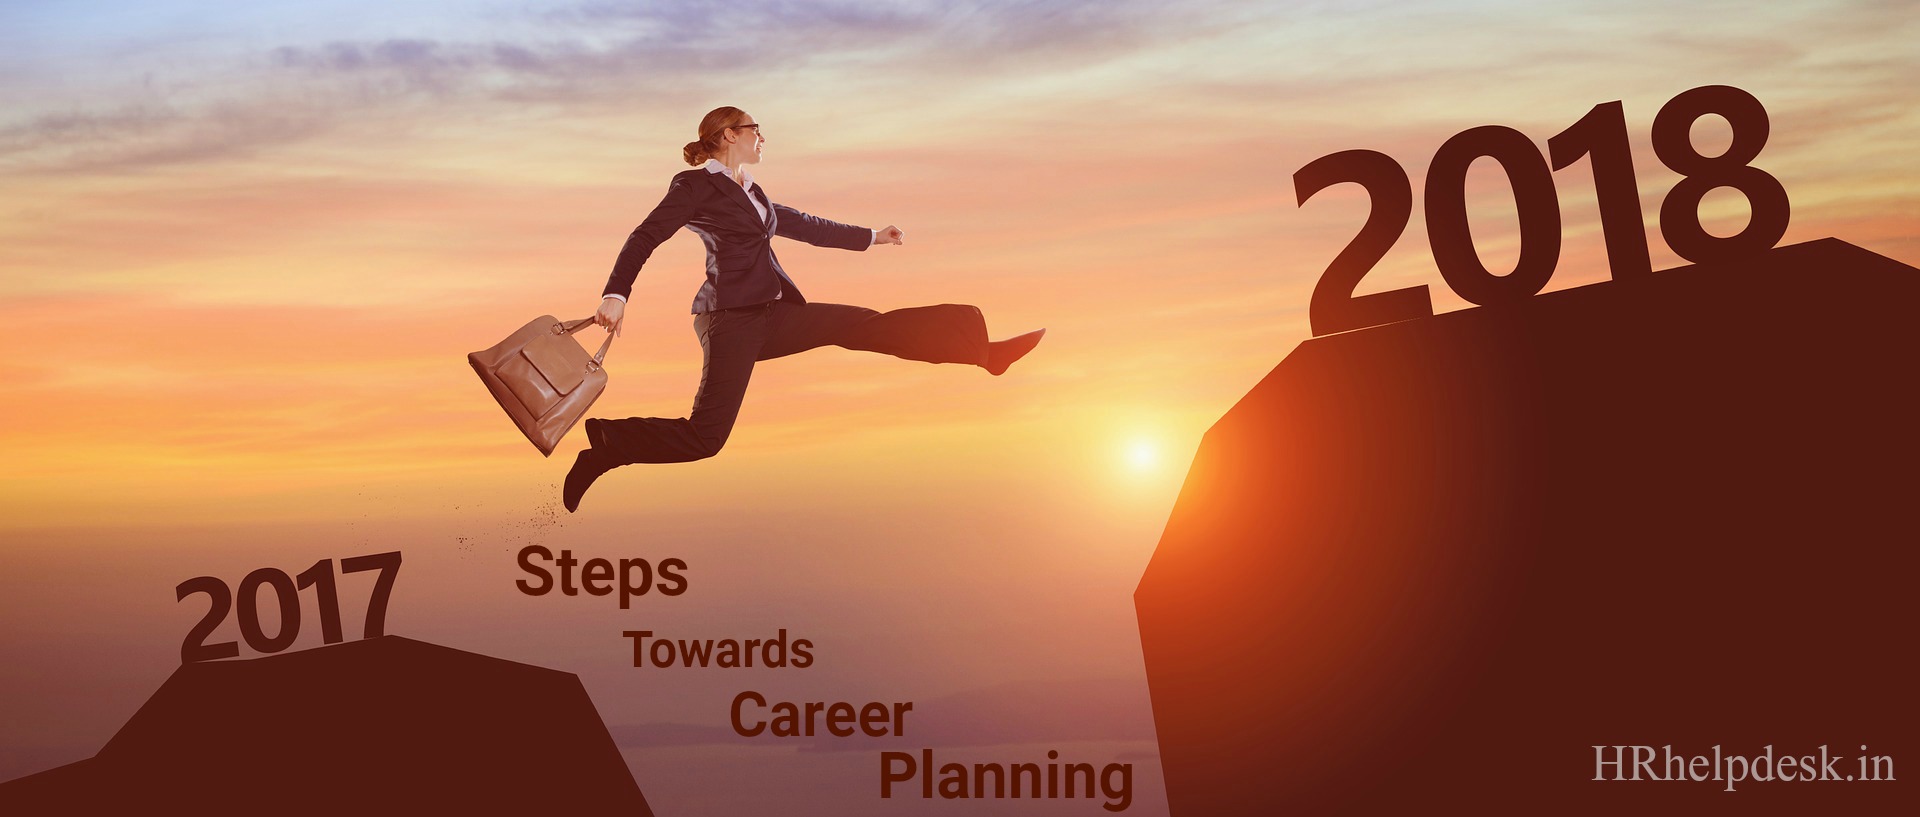 career planning HR helpdesk